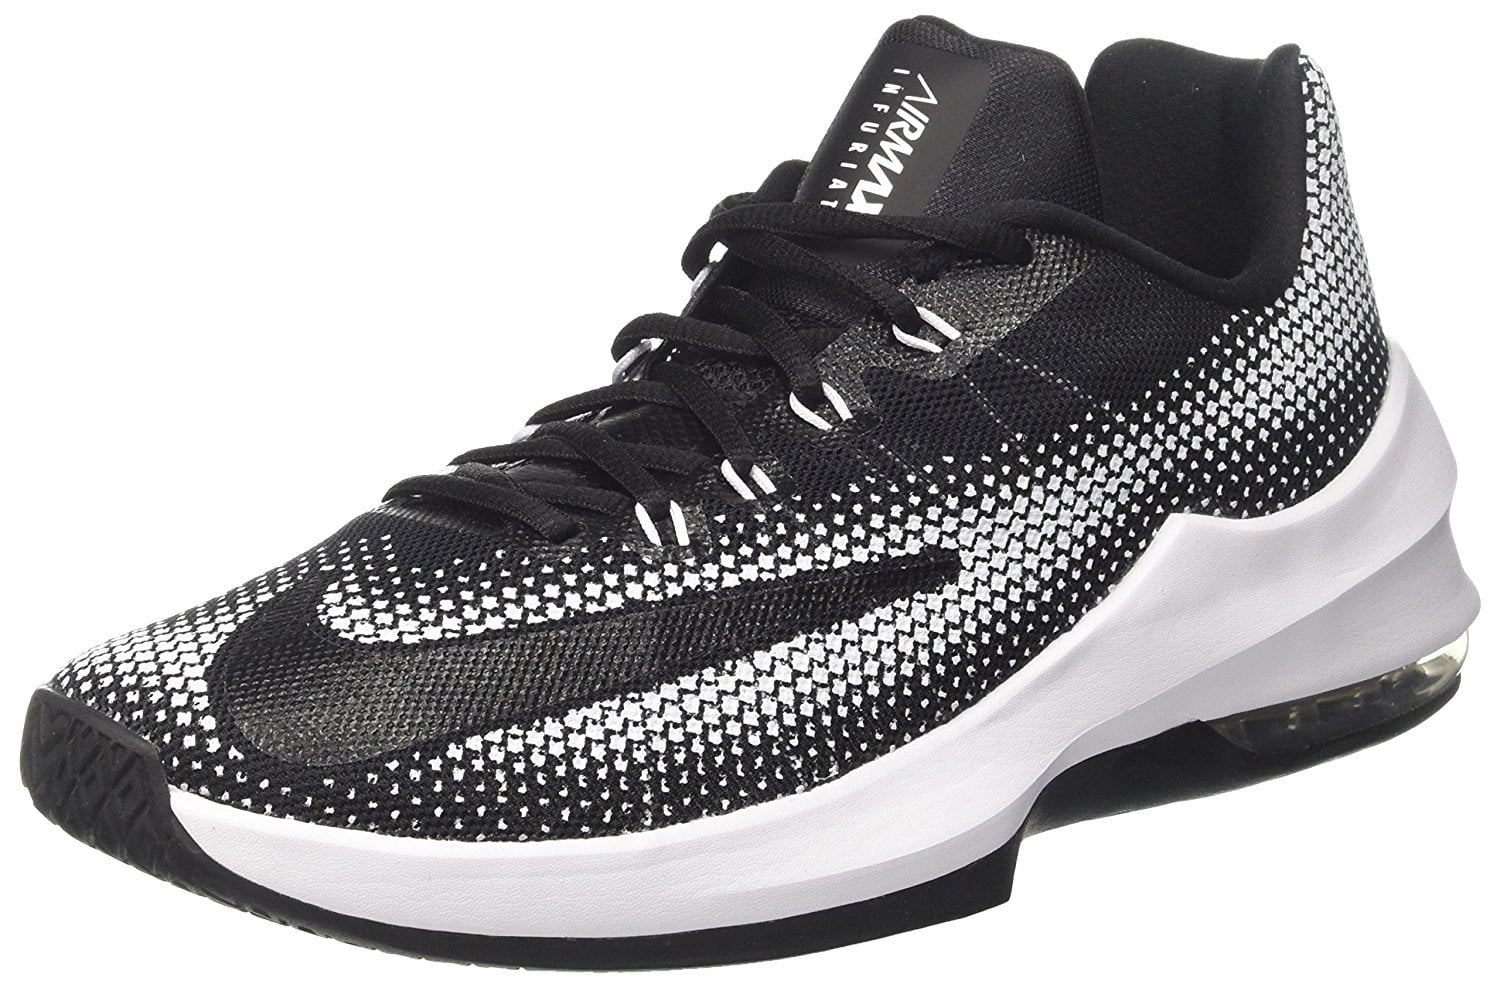 Nike Air Max Infuriate Low Basketball Shoe, Black/White-Dark Grey, 10 رسم قهوة